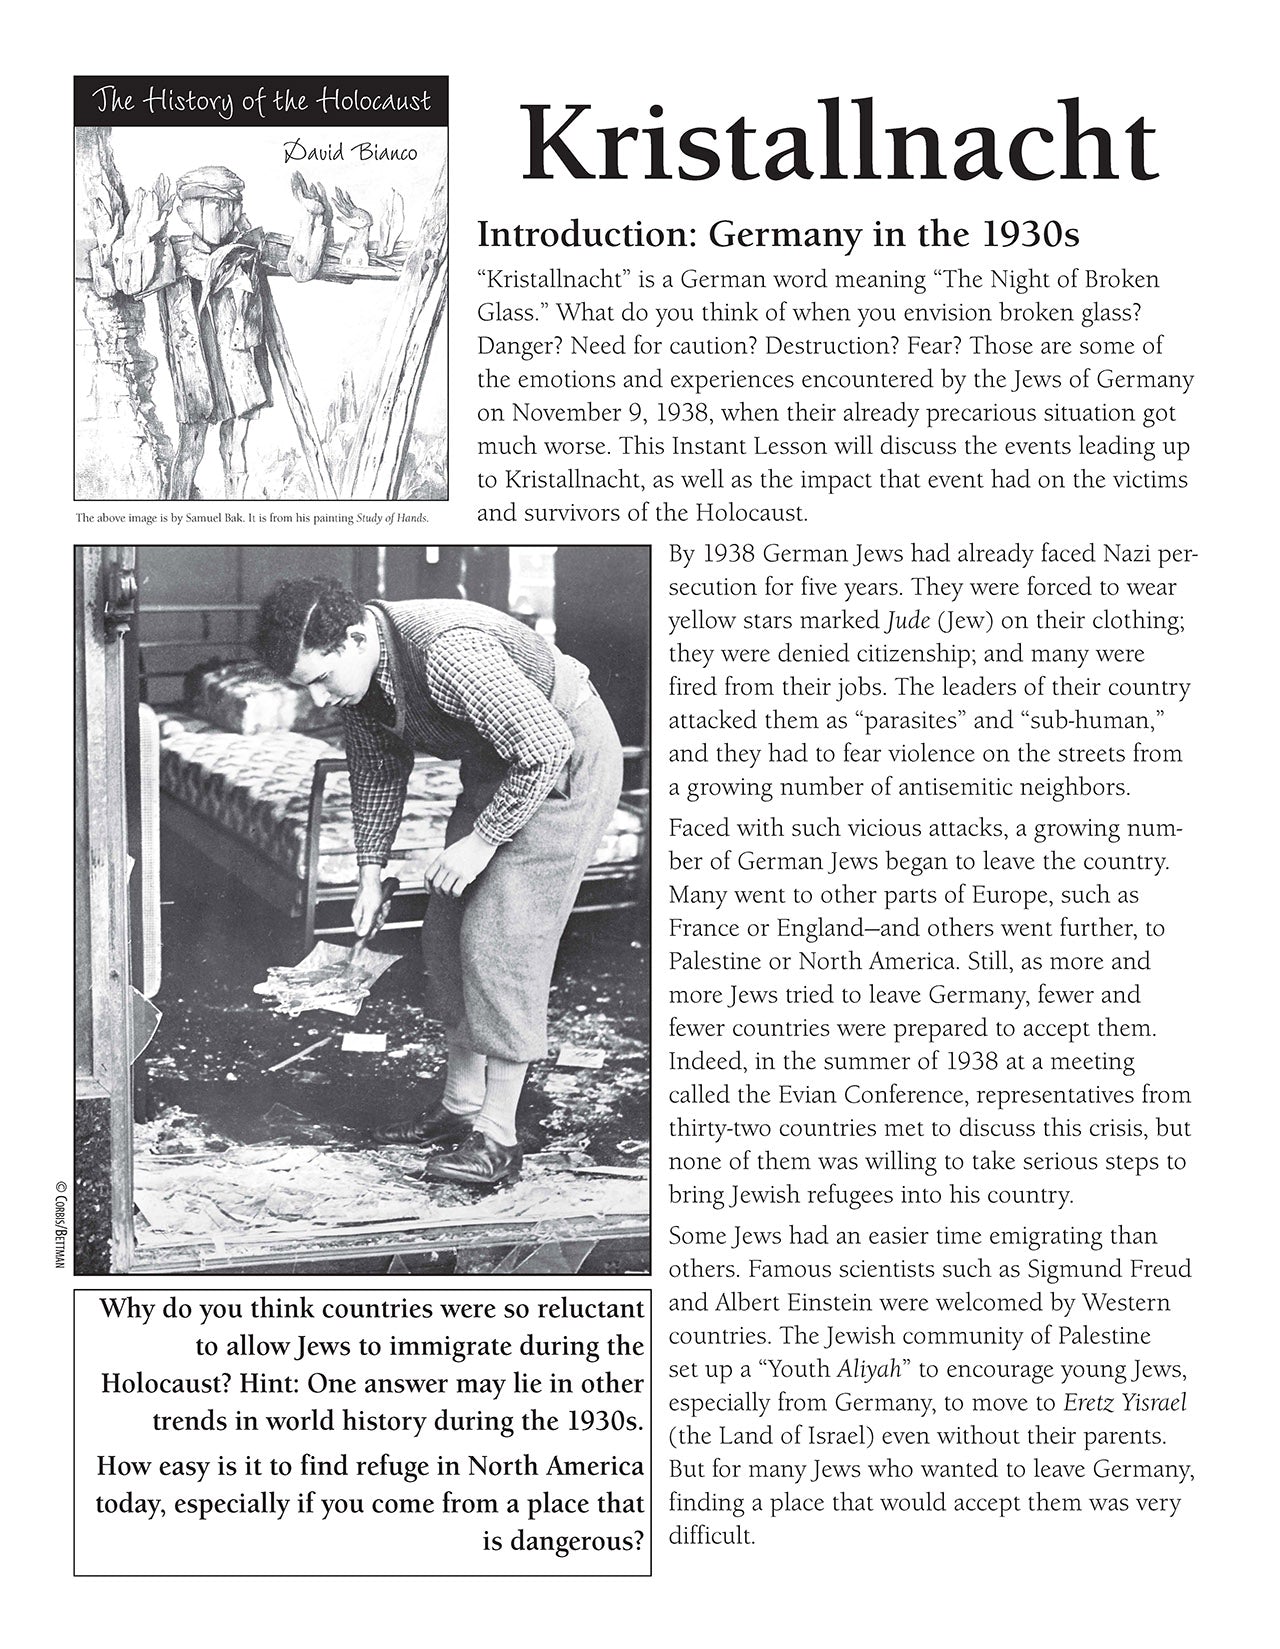 History of the Holocaust: Kristallnacht